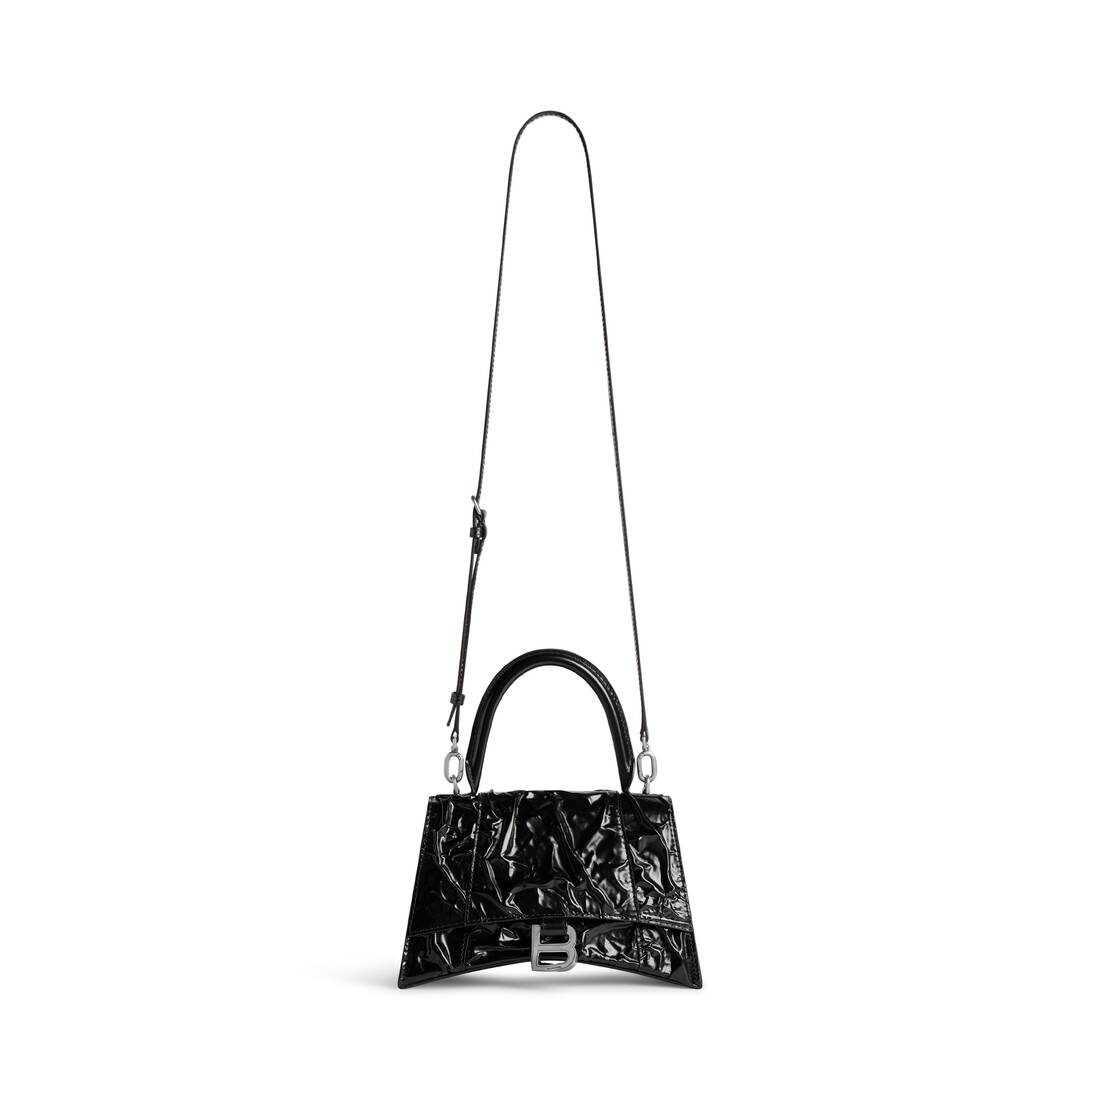 Balenciaga Hourglass Top Handle Mini Bag in White